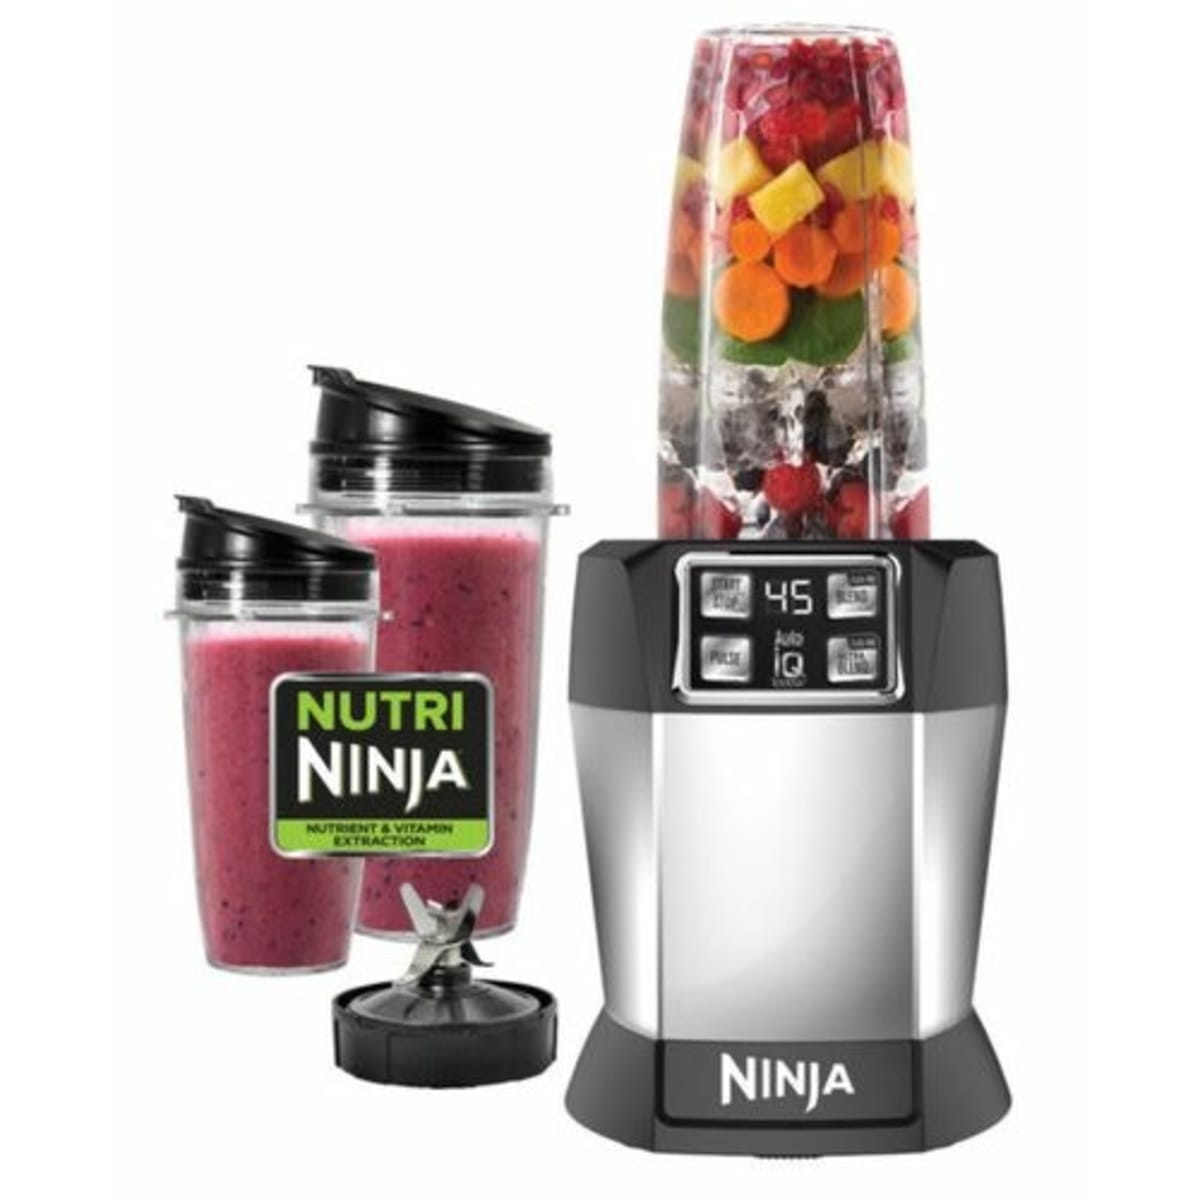 Ninja Nutri Ninja Blender With 2 Cups -1000watts